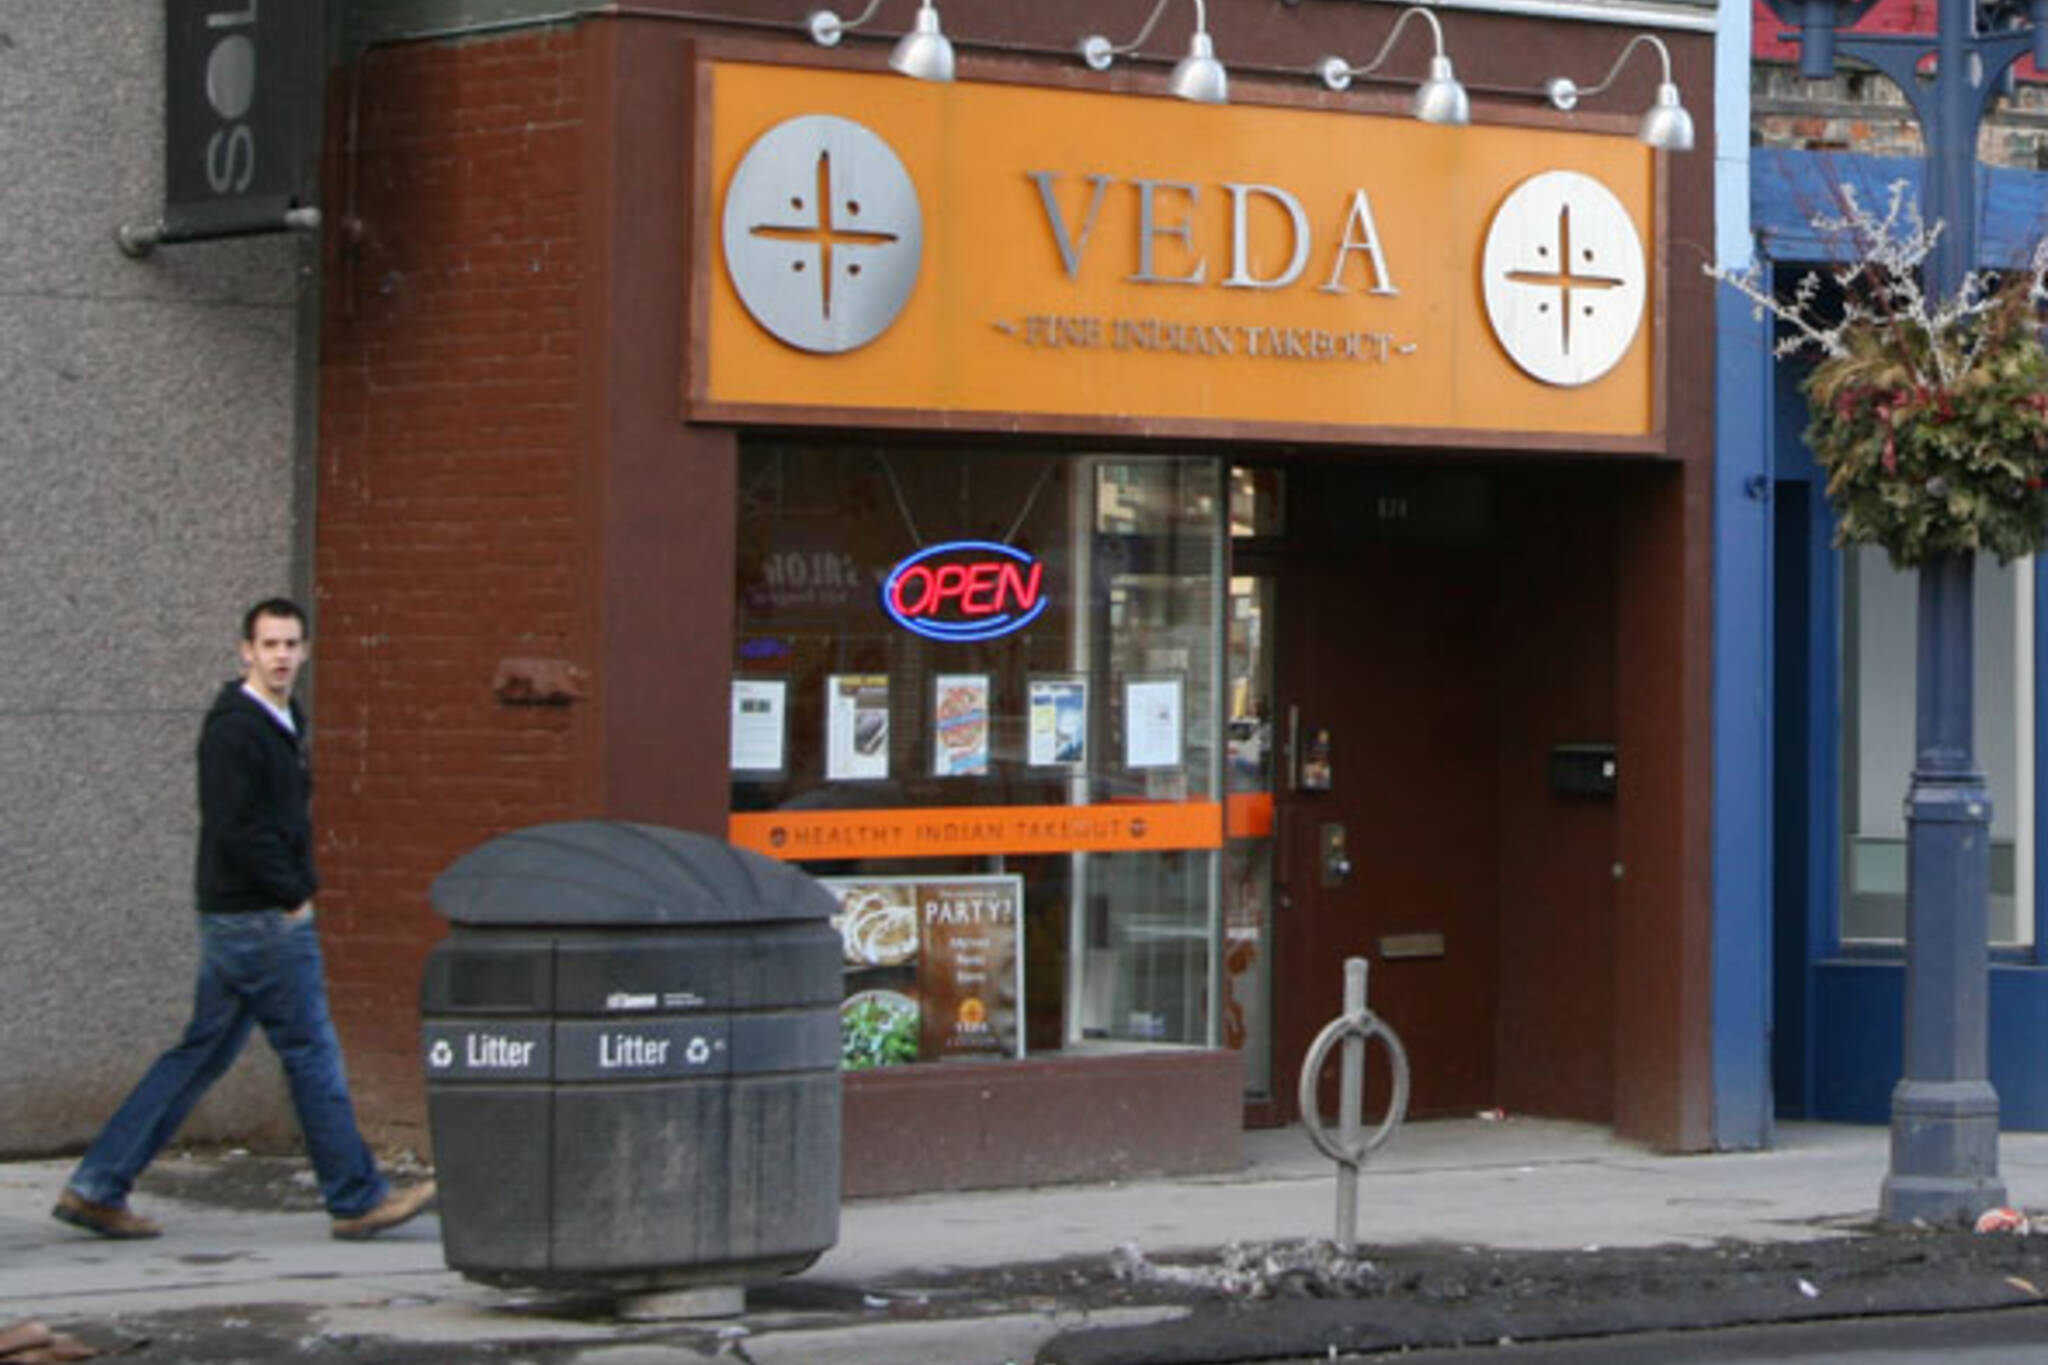 Veda Indian Toronto